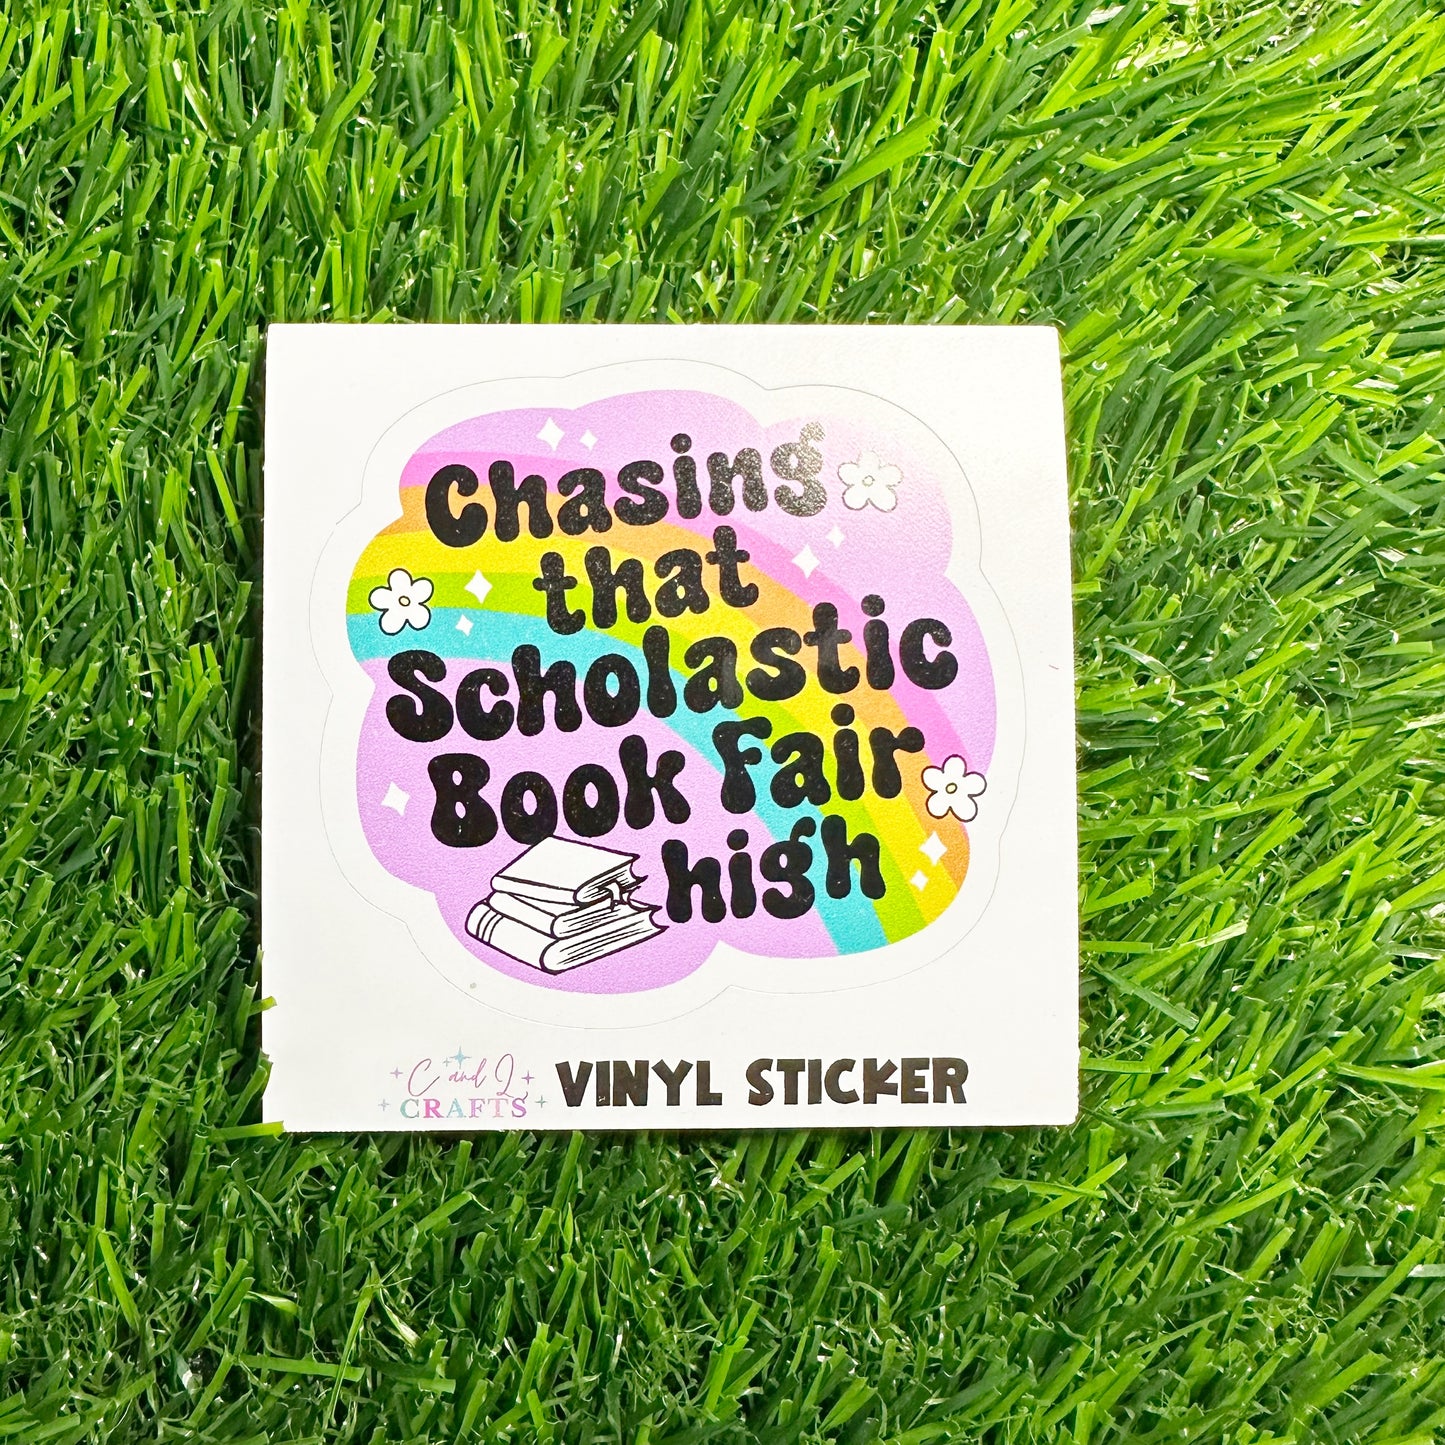 Chasing that Scholastic Book Fair High Vinyl Sticker